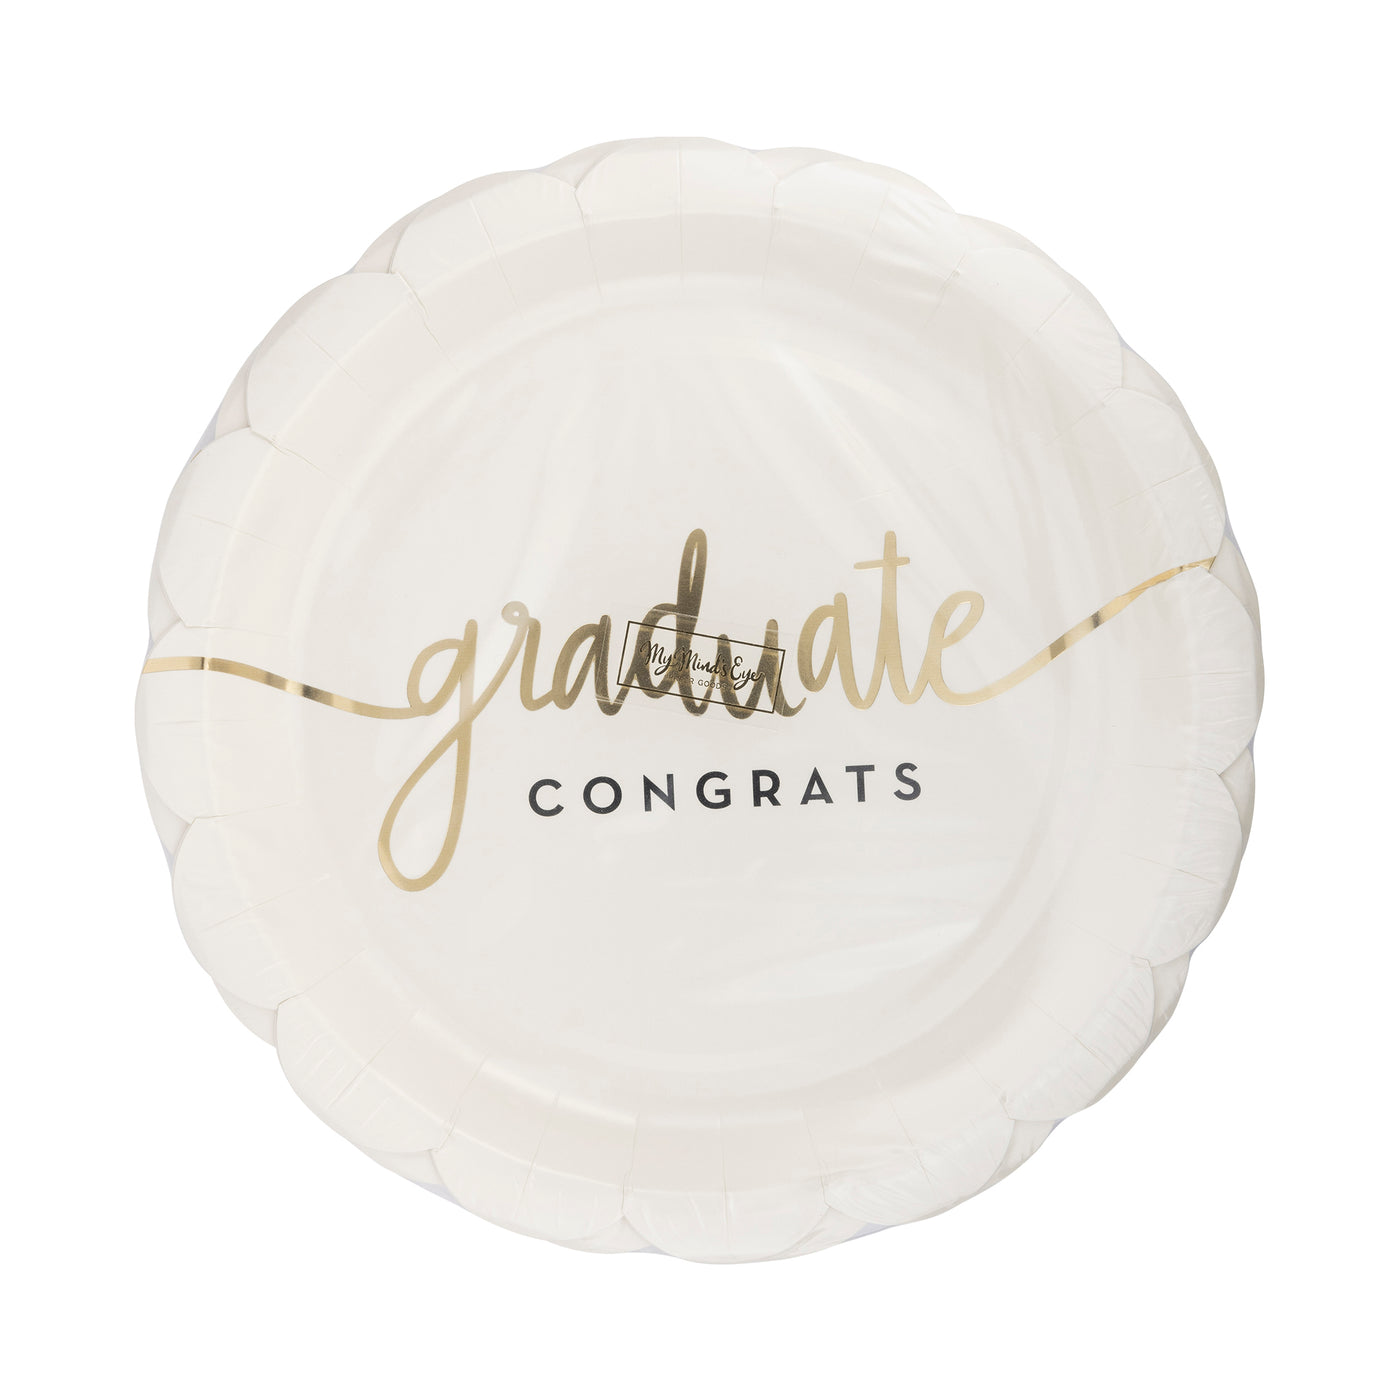 Graduate Congrats Paper Plate